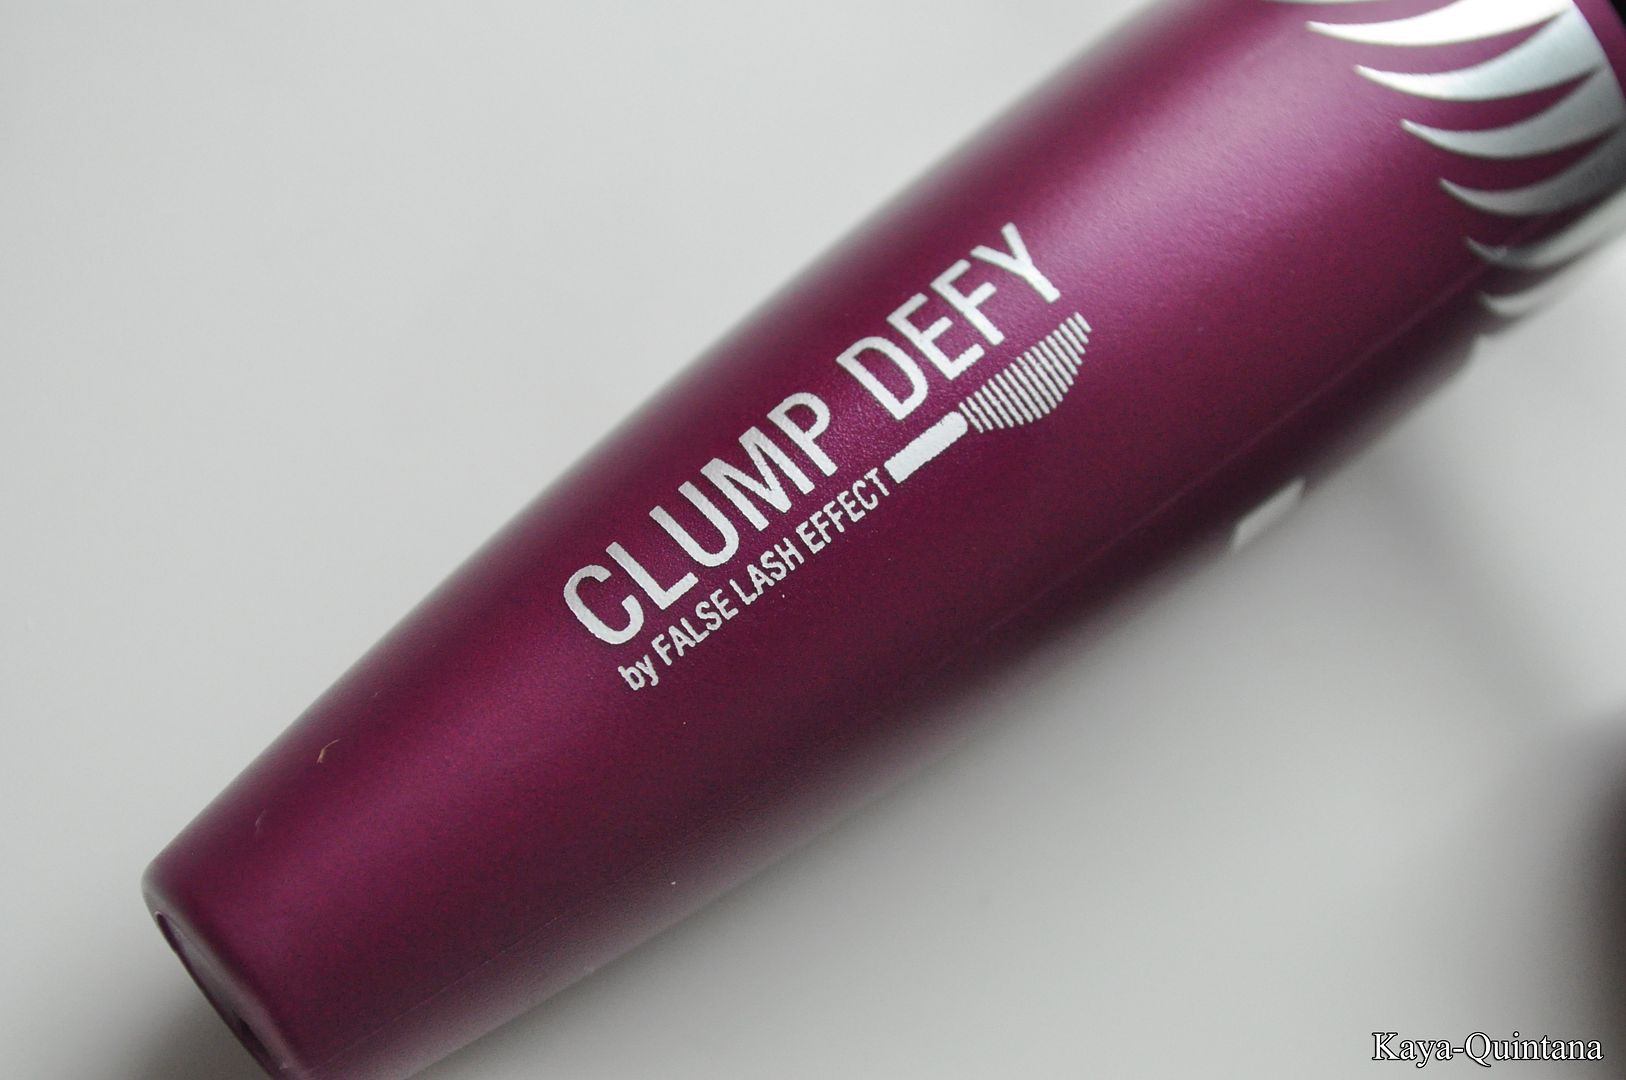 Clump defy mascara review